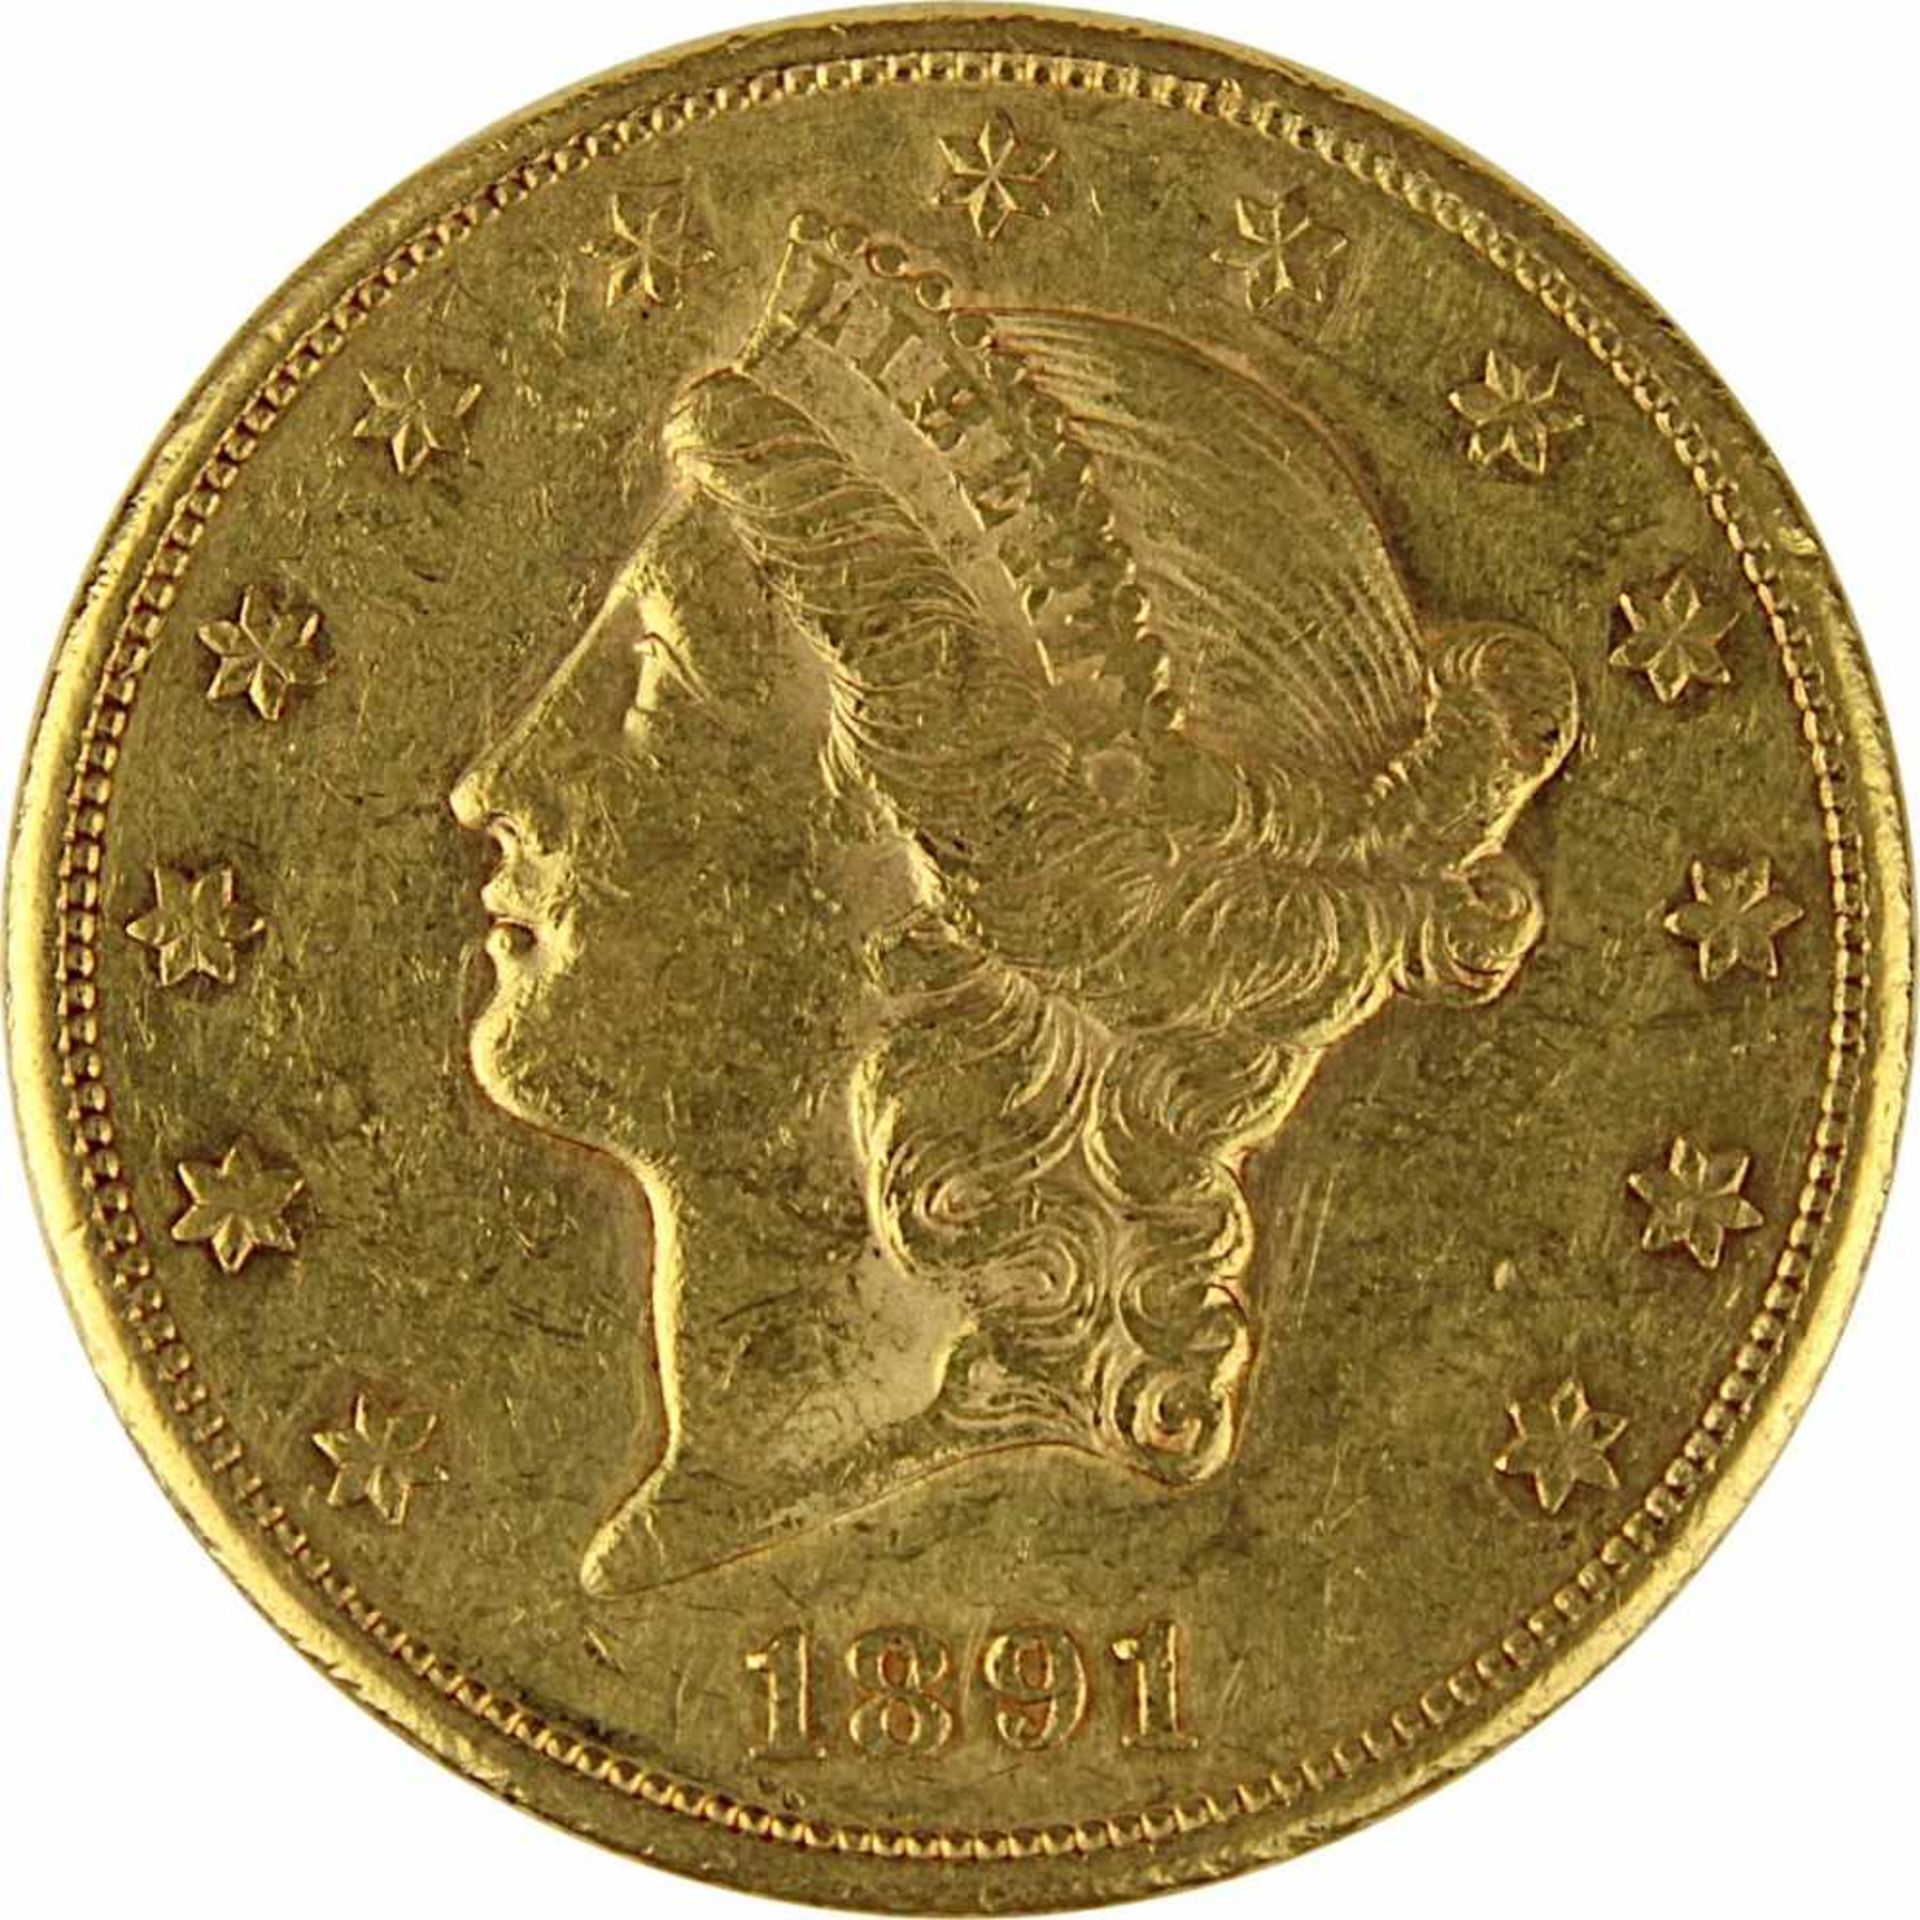 Goldmünze zu 20 Dollar, USA 1891, 900er Gold, Gewicht 1 Unze Feingold, Coroned Head / Eagle, - Bild 2 aus 3